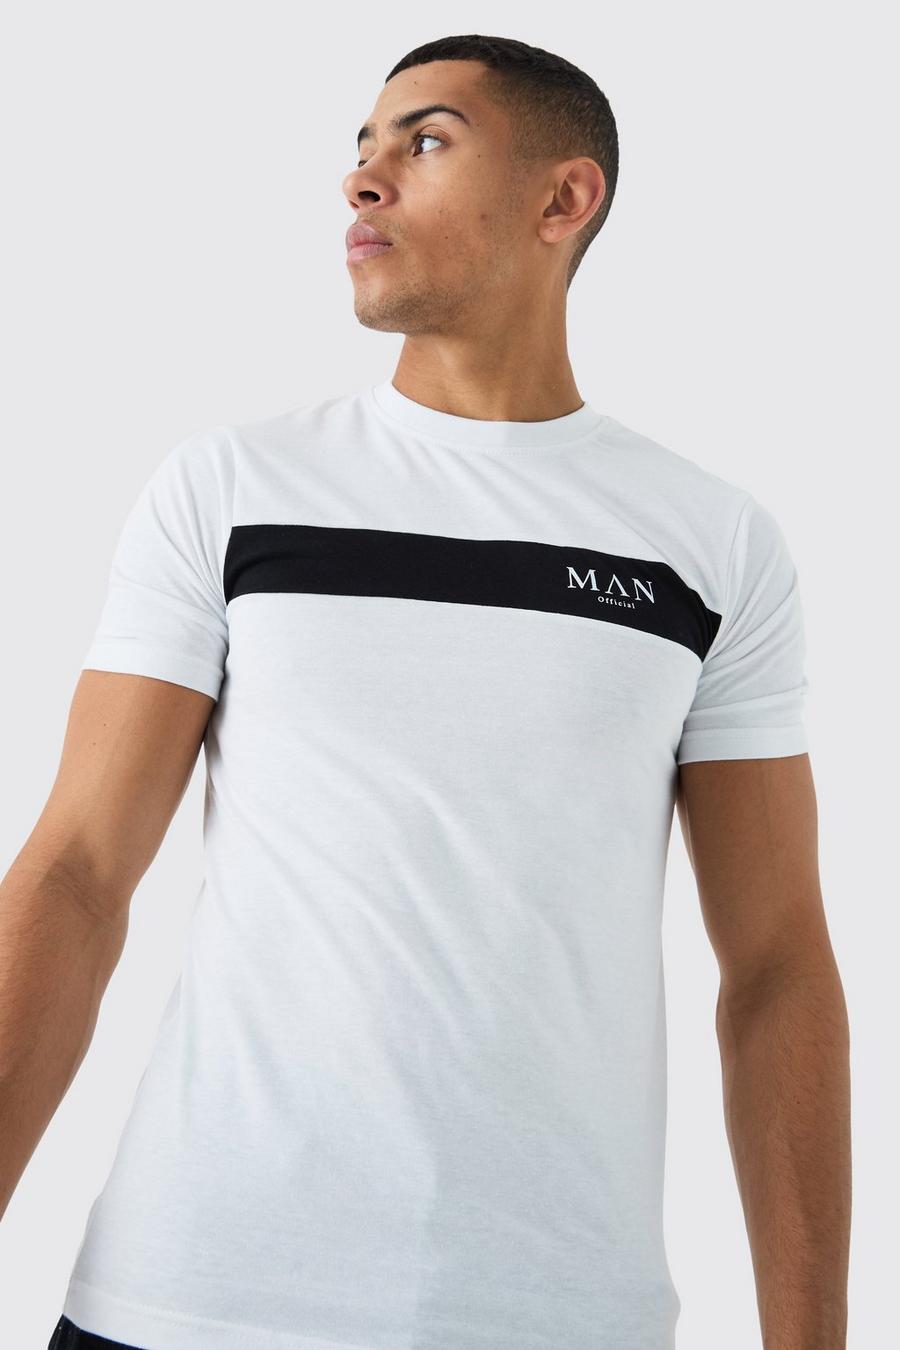 Man Roman Muscle-Fit Colorblock T-Shirt, White